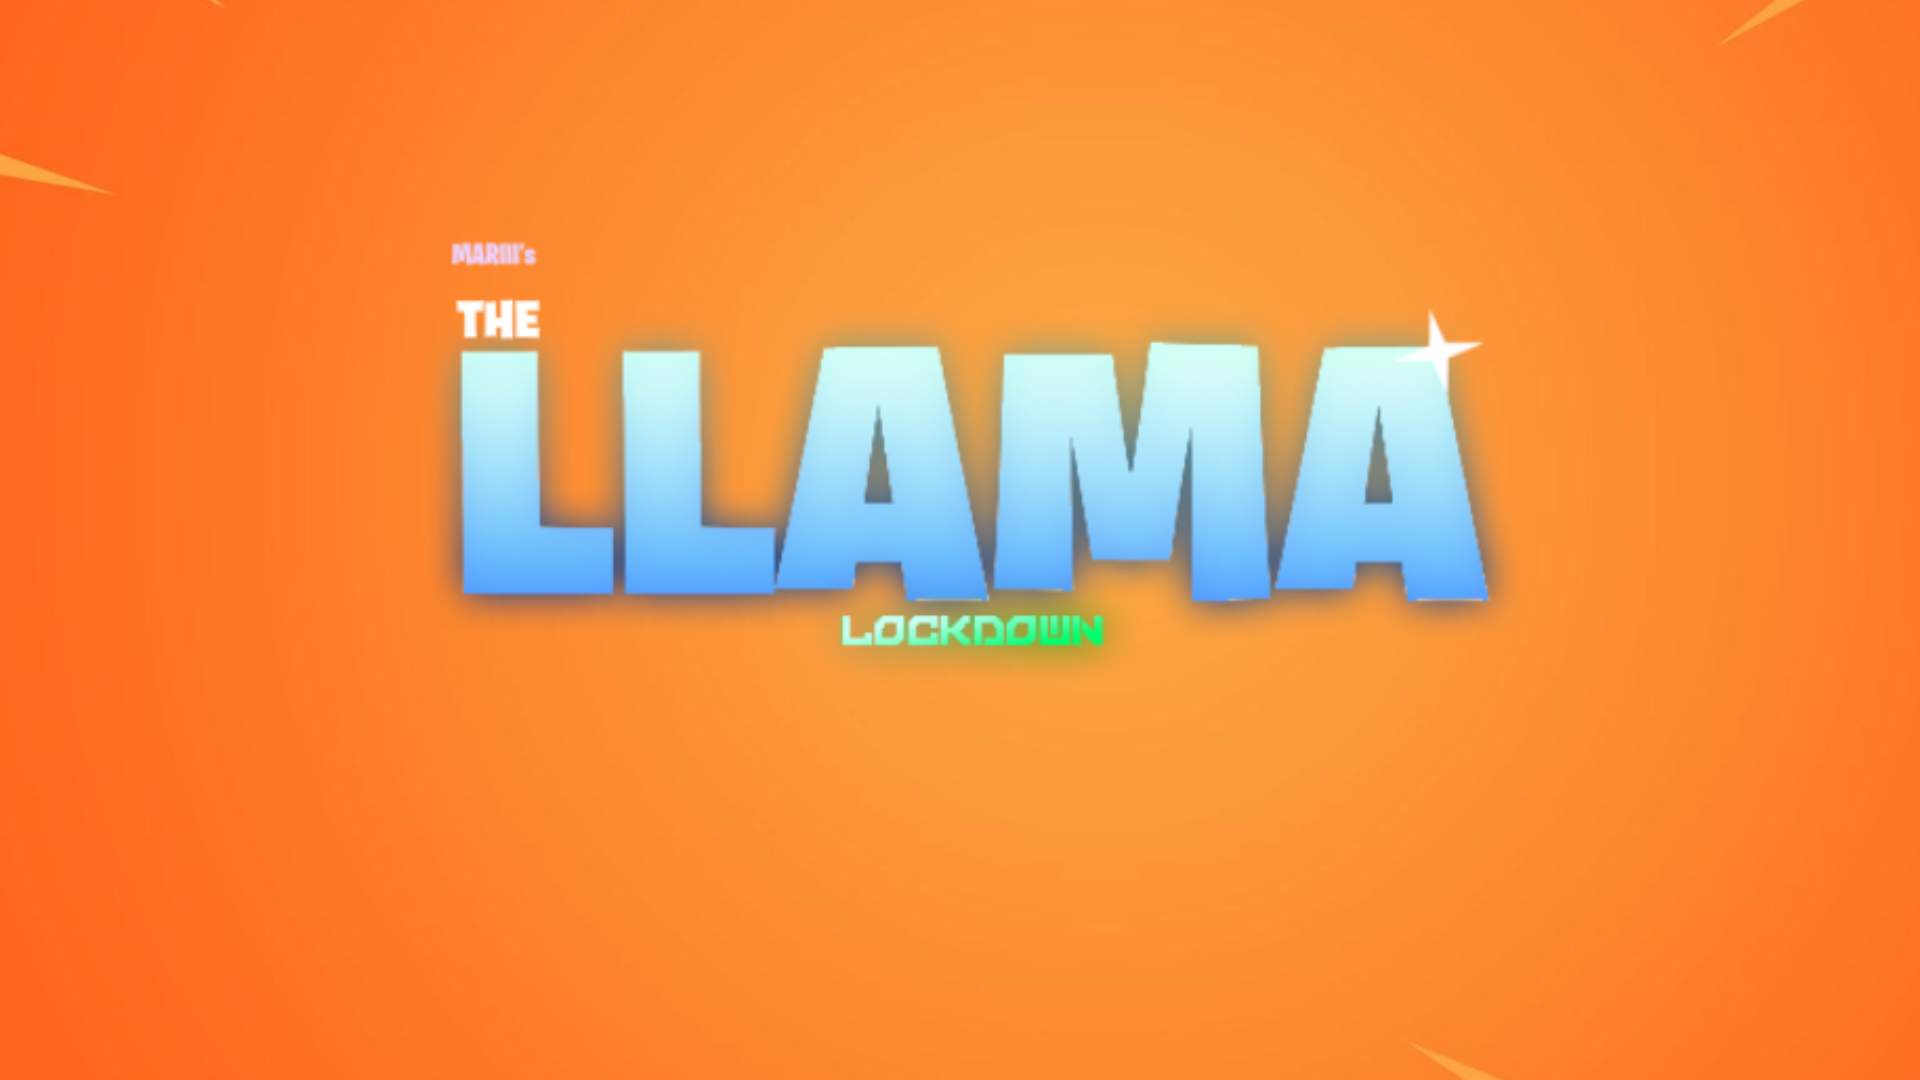 THE LLAMA LOCKDOWN!